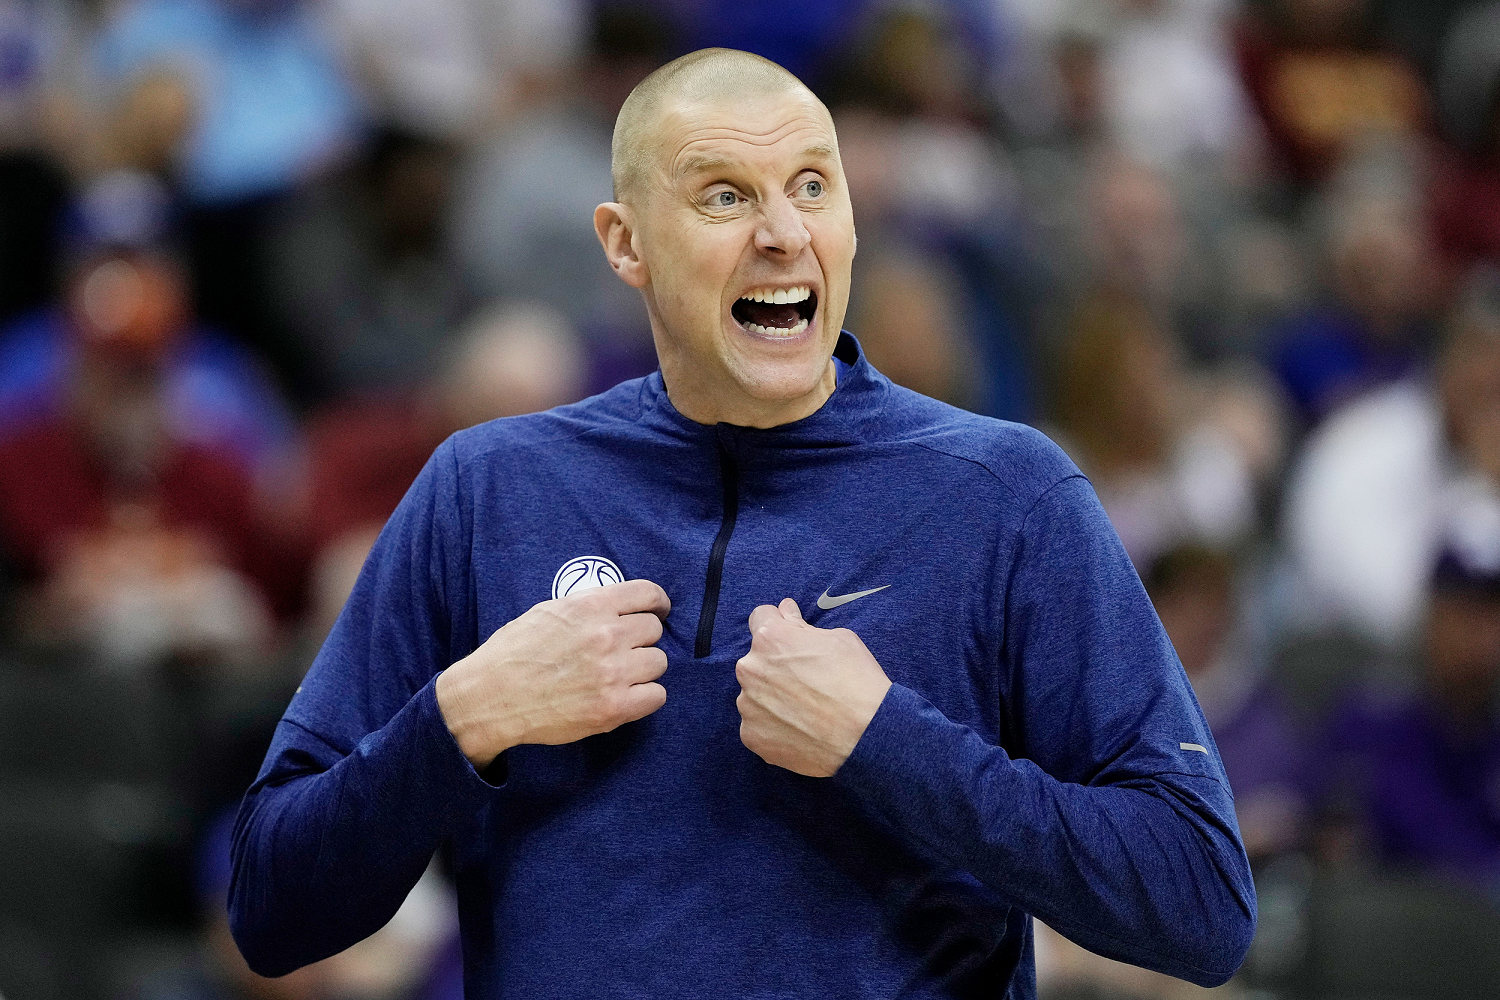 Kentucky hires BYU’s Mark Pope as men’s basketball coach to replace John Calipari